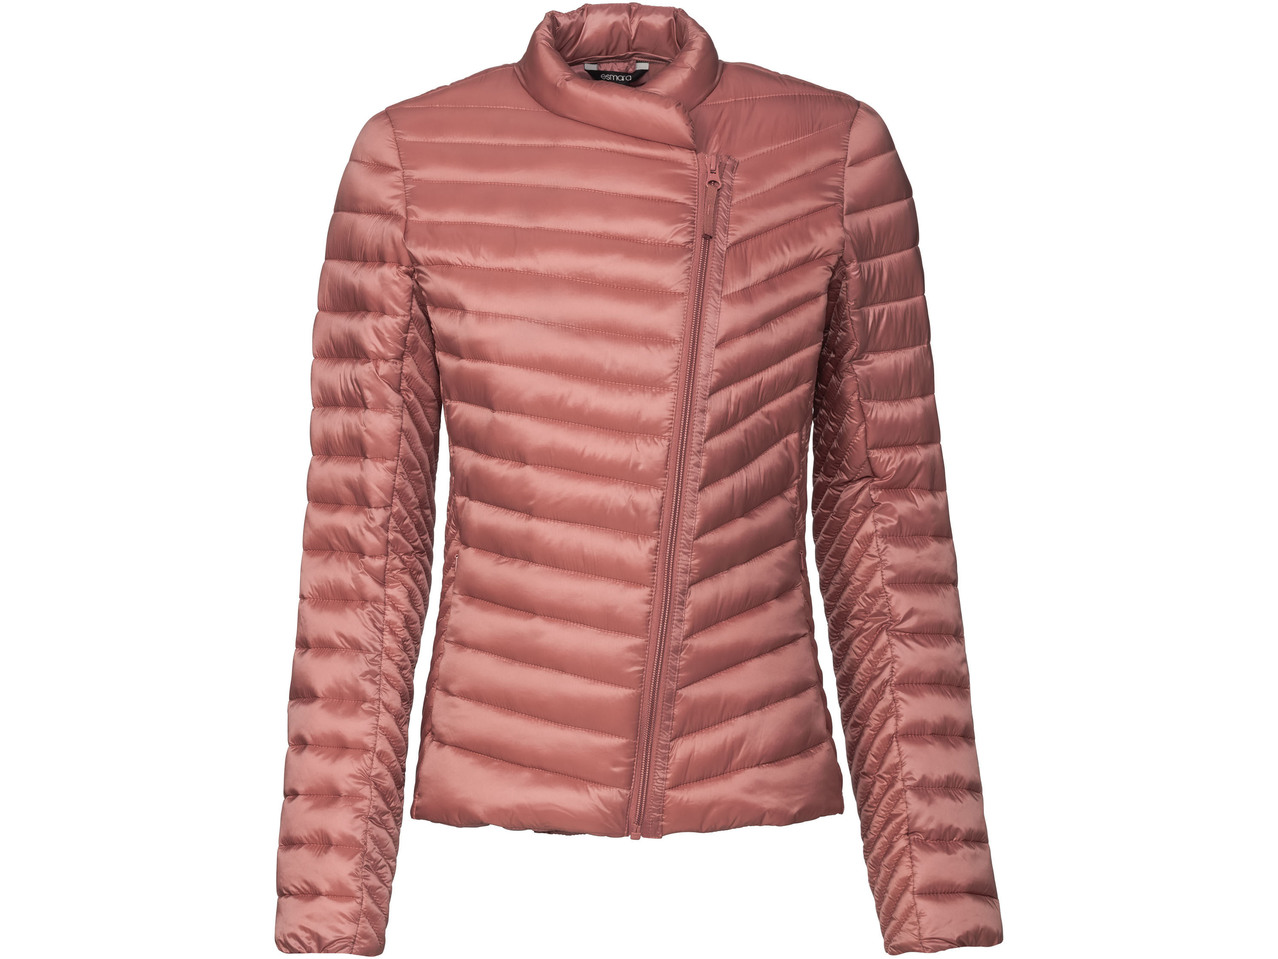 Ladies' or Men's Lightweight Thermal Jacket